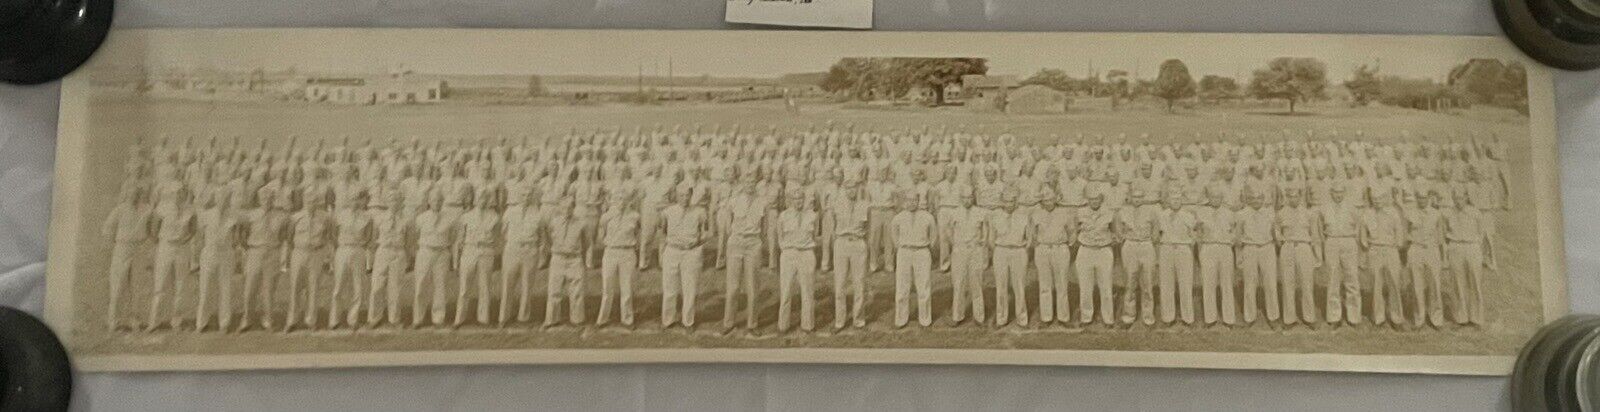 WW2 Era Panoramic Photograph 1942-1946 Group Army Fort Dix NJ David Pond Willis